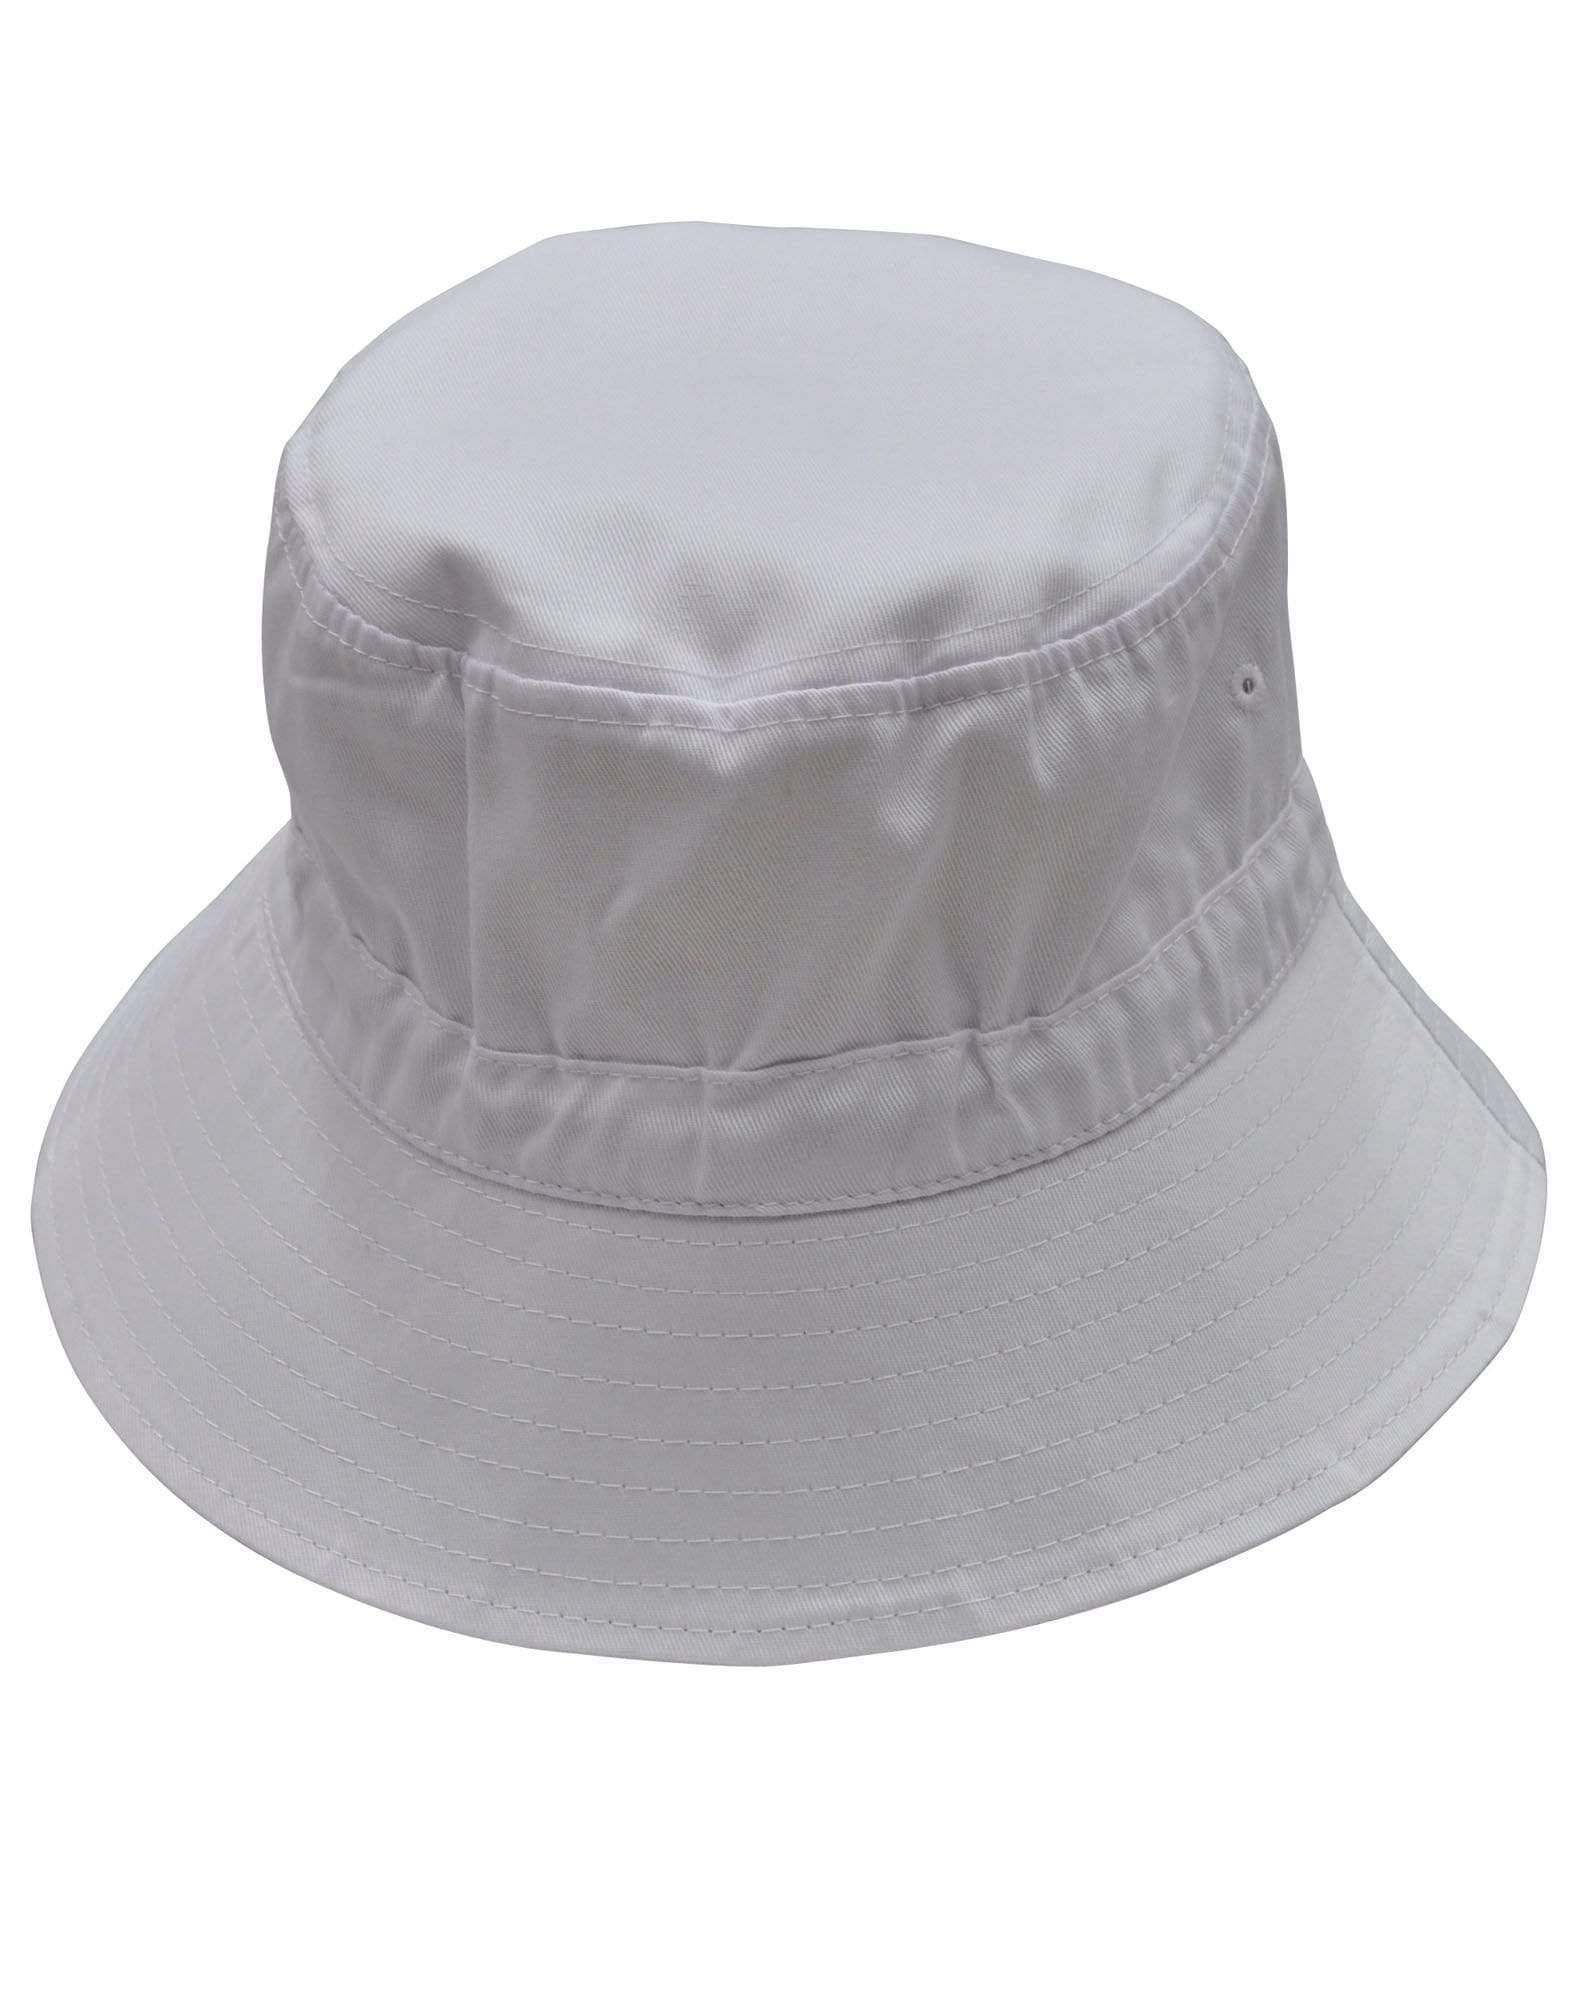 Bucket Hat With Toggle H1034 Active Wear Winning Spirit White S/M 